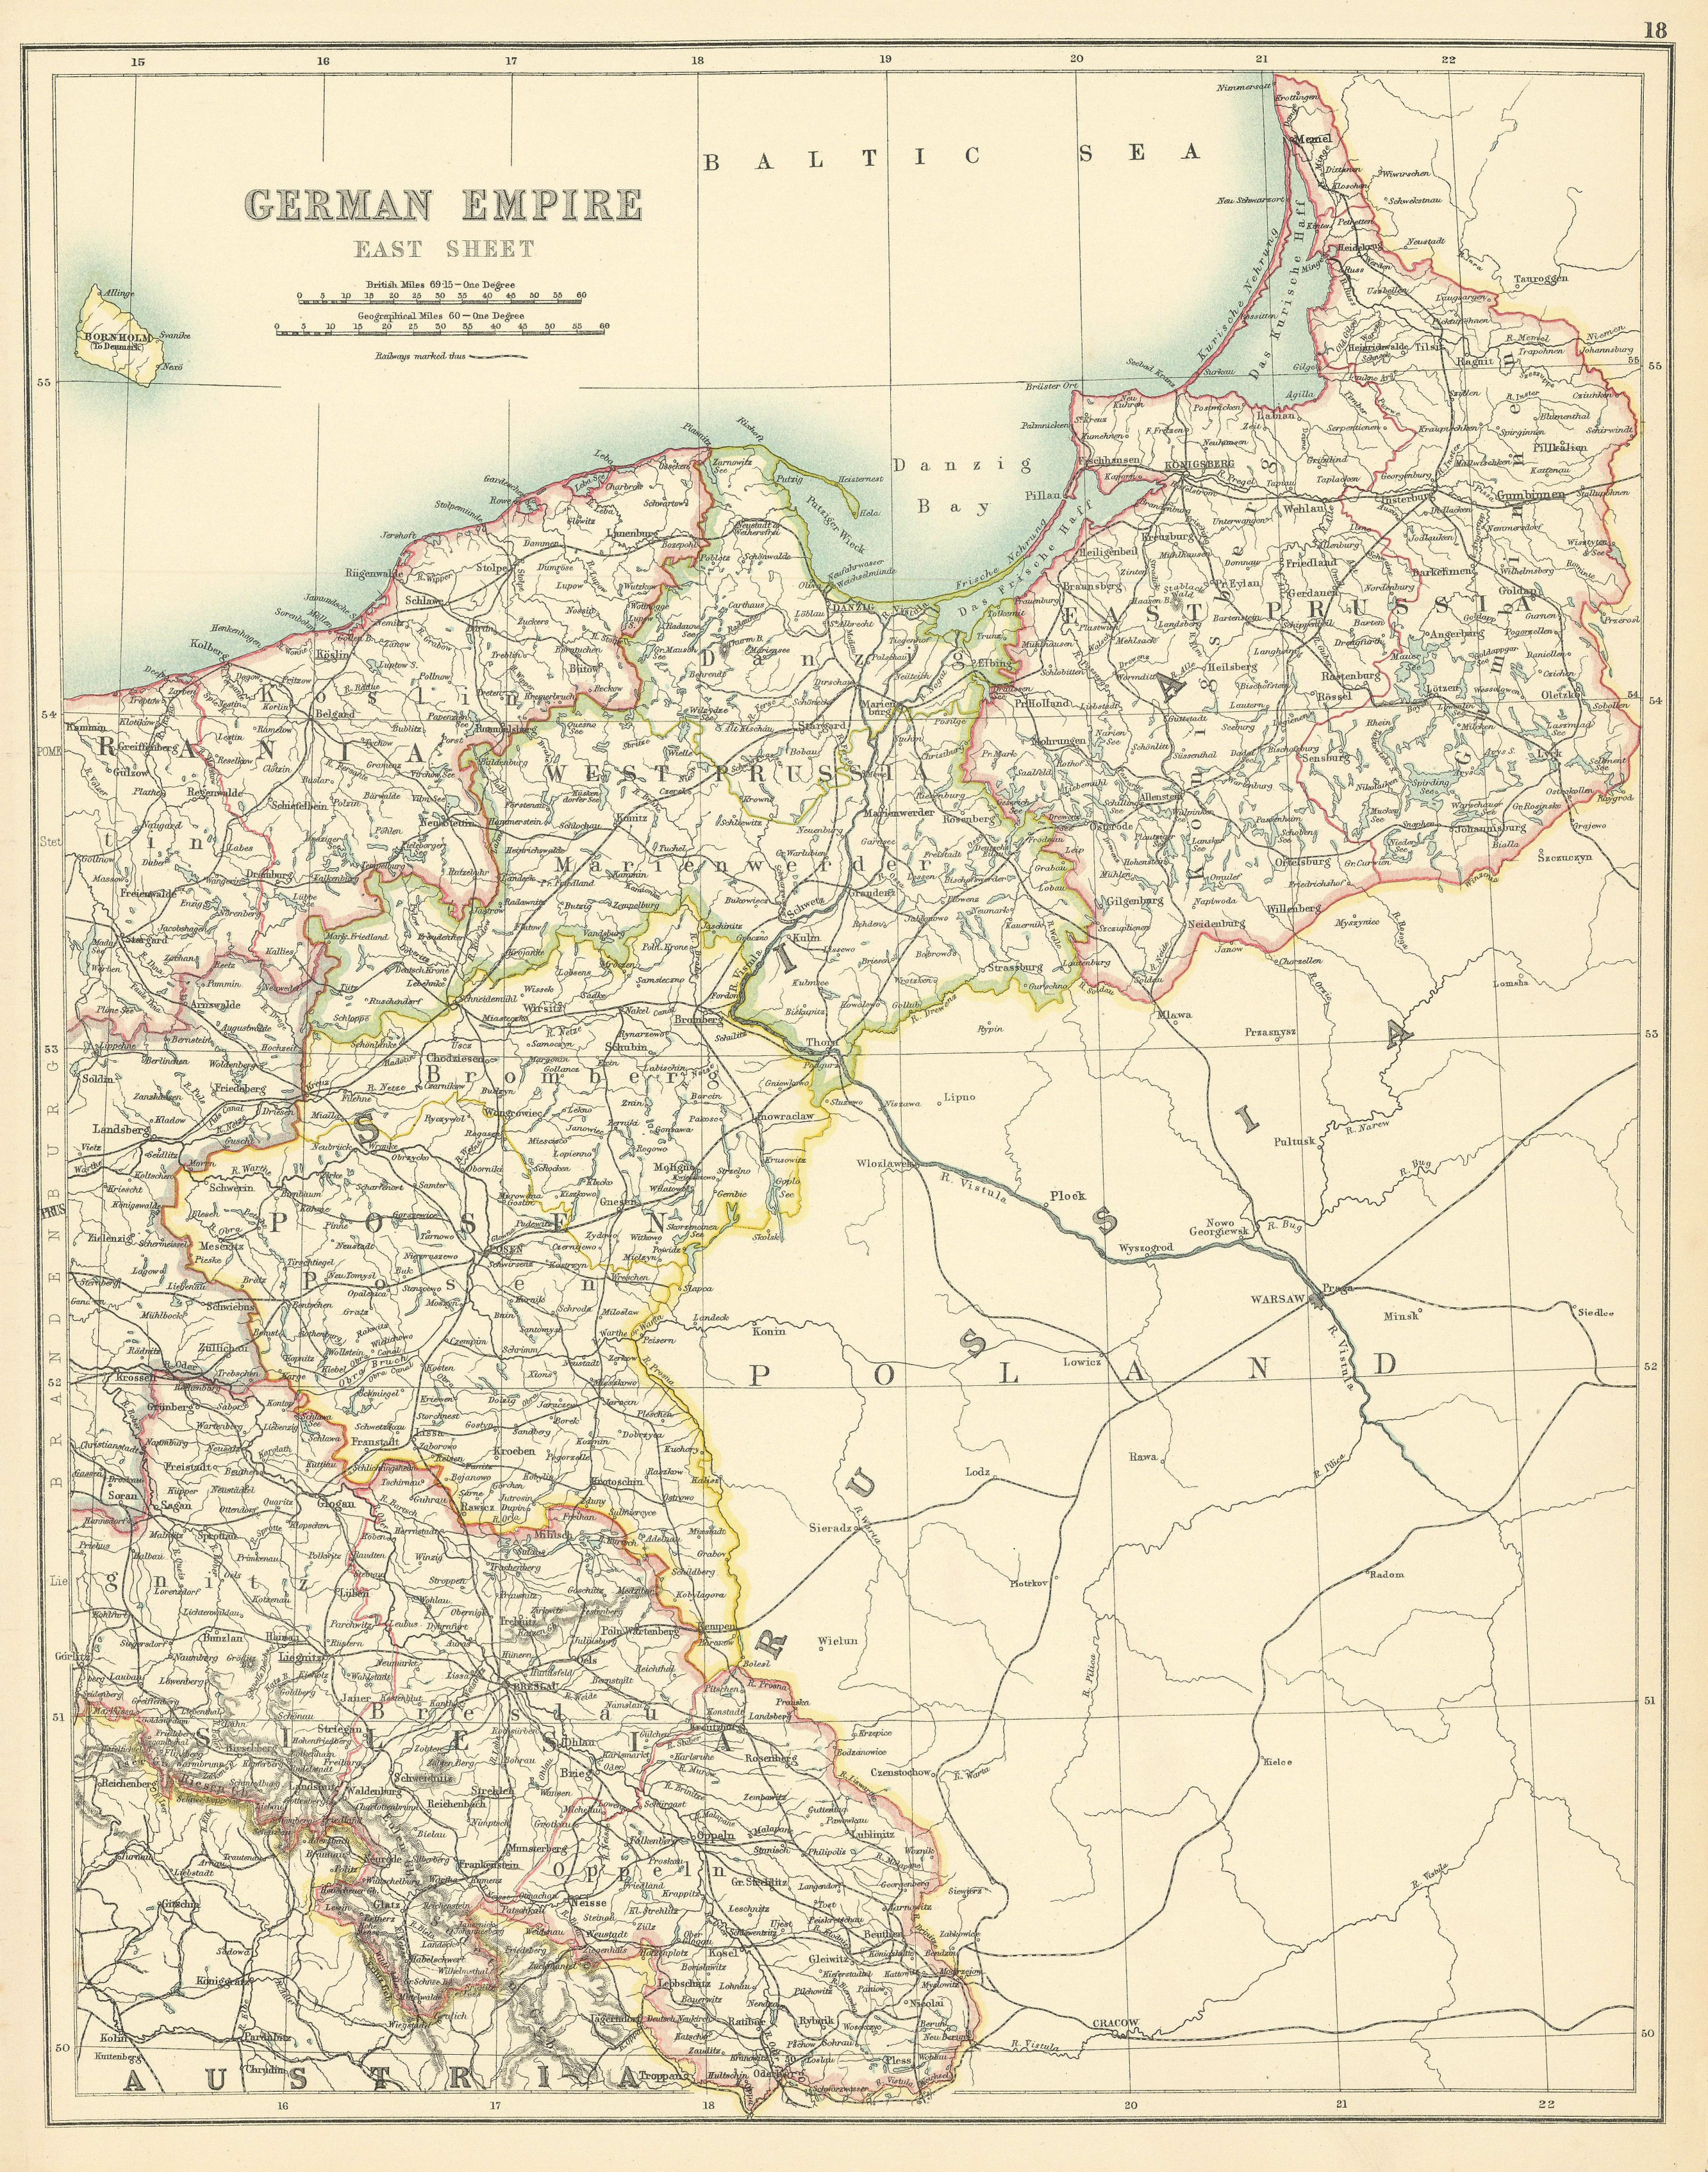 Associate Product German Empire East. Germany Poland Prussia Silesia Posen. BARTHOLOMEW 1898 map